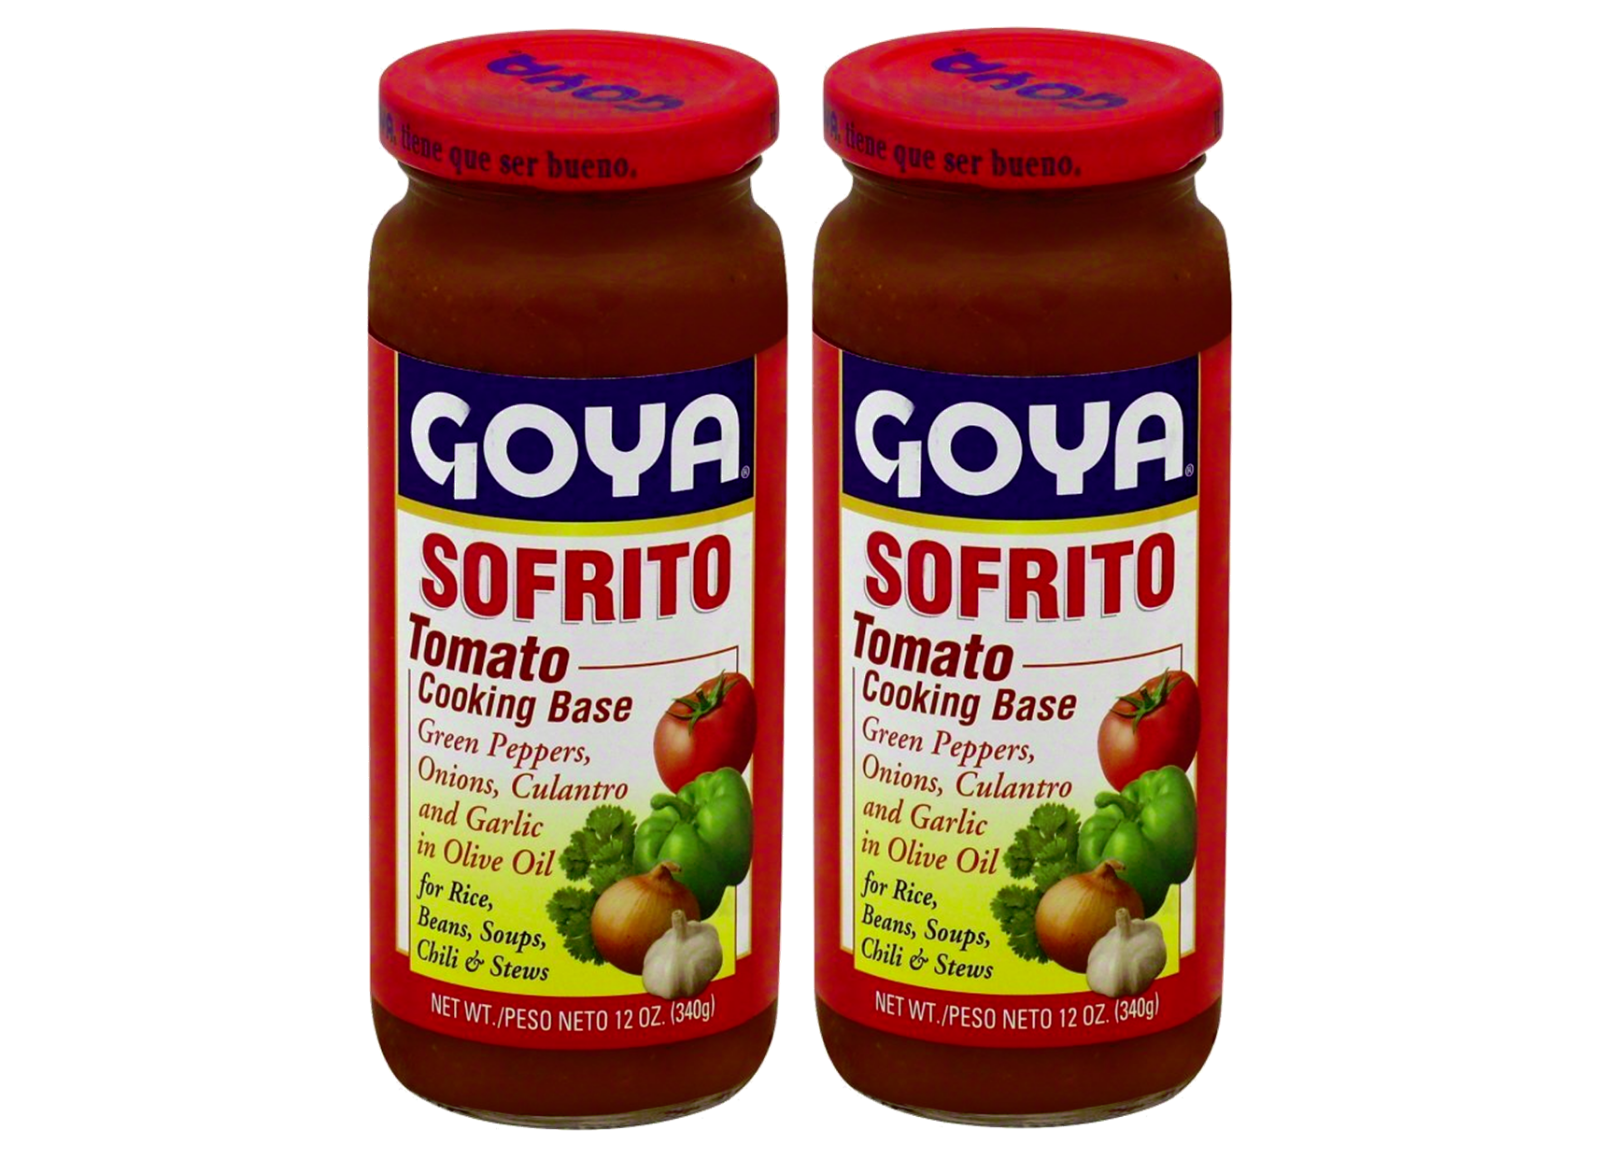 Primary image for Goya Sofrito Tomato Cooking Base, 2-Pack 12 oz. Jars